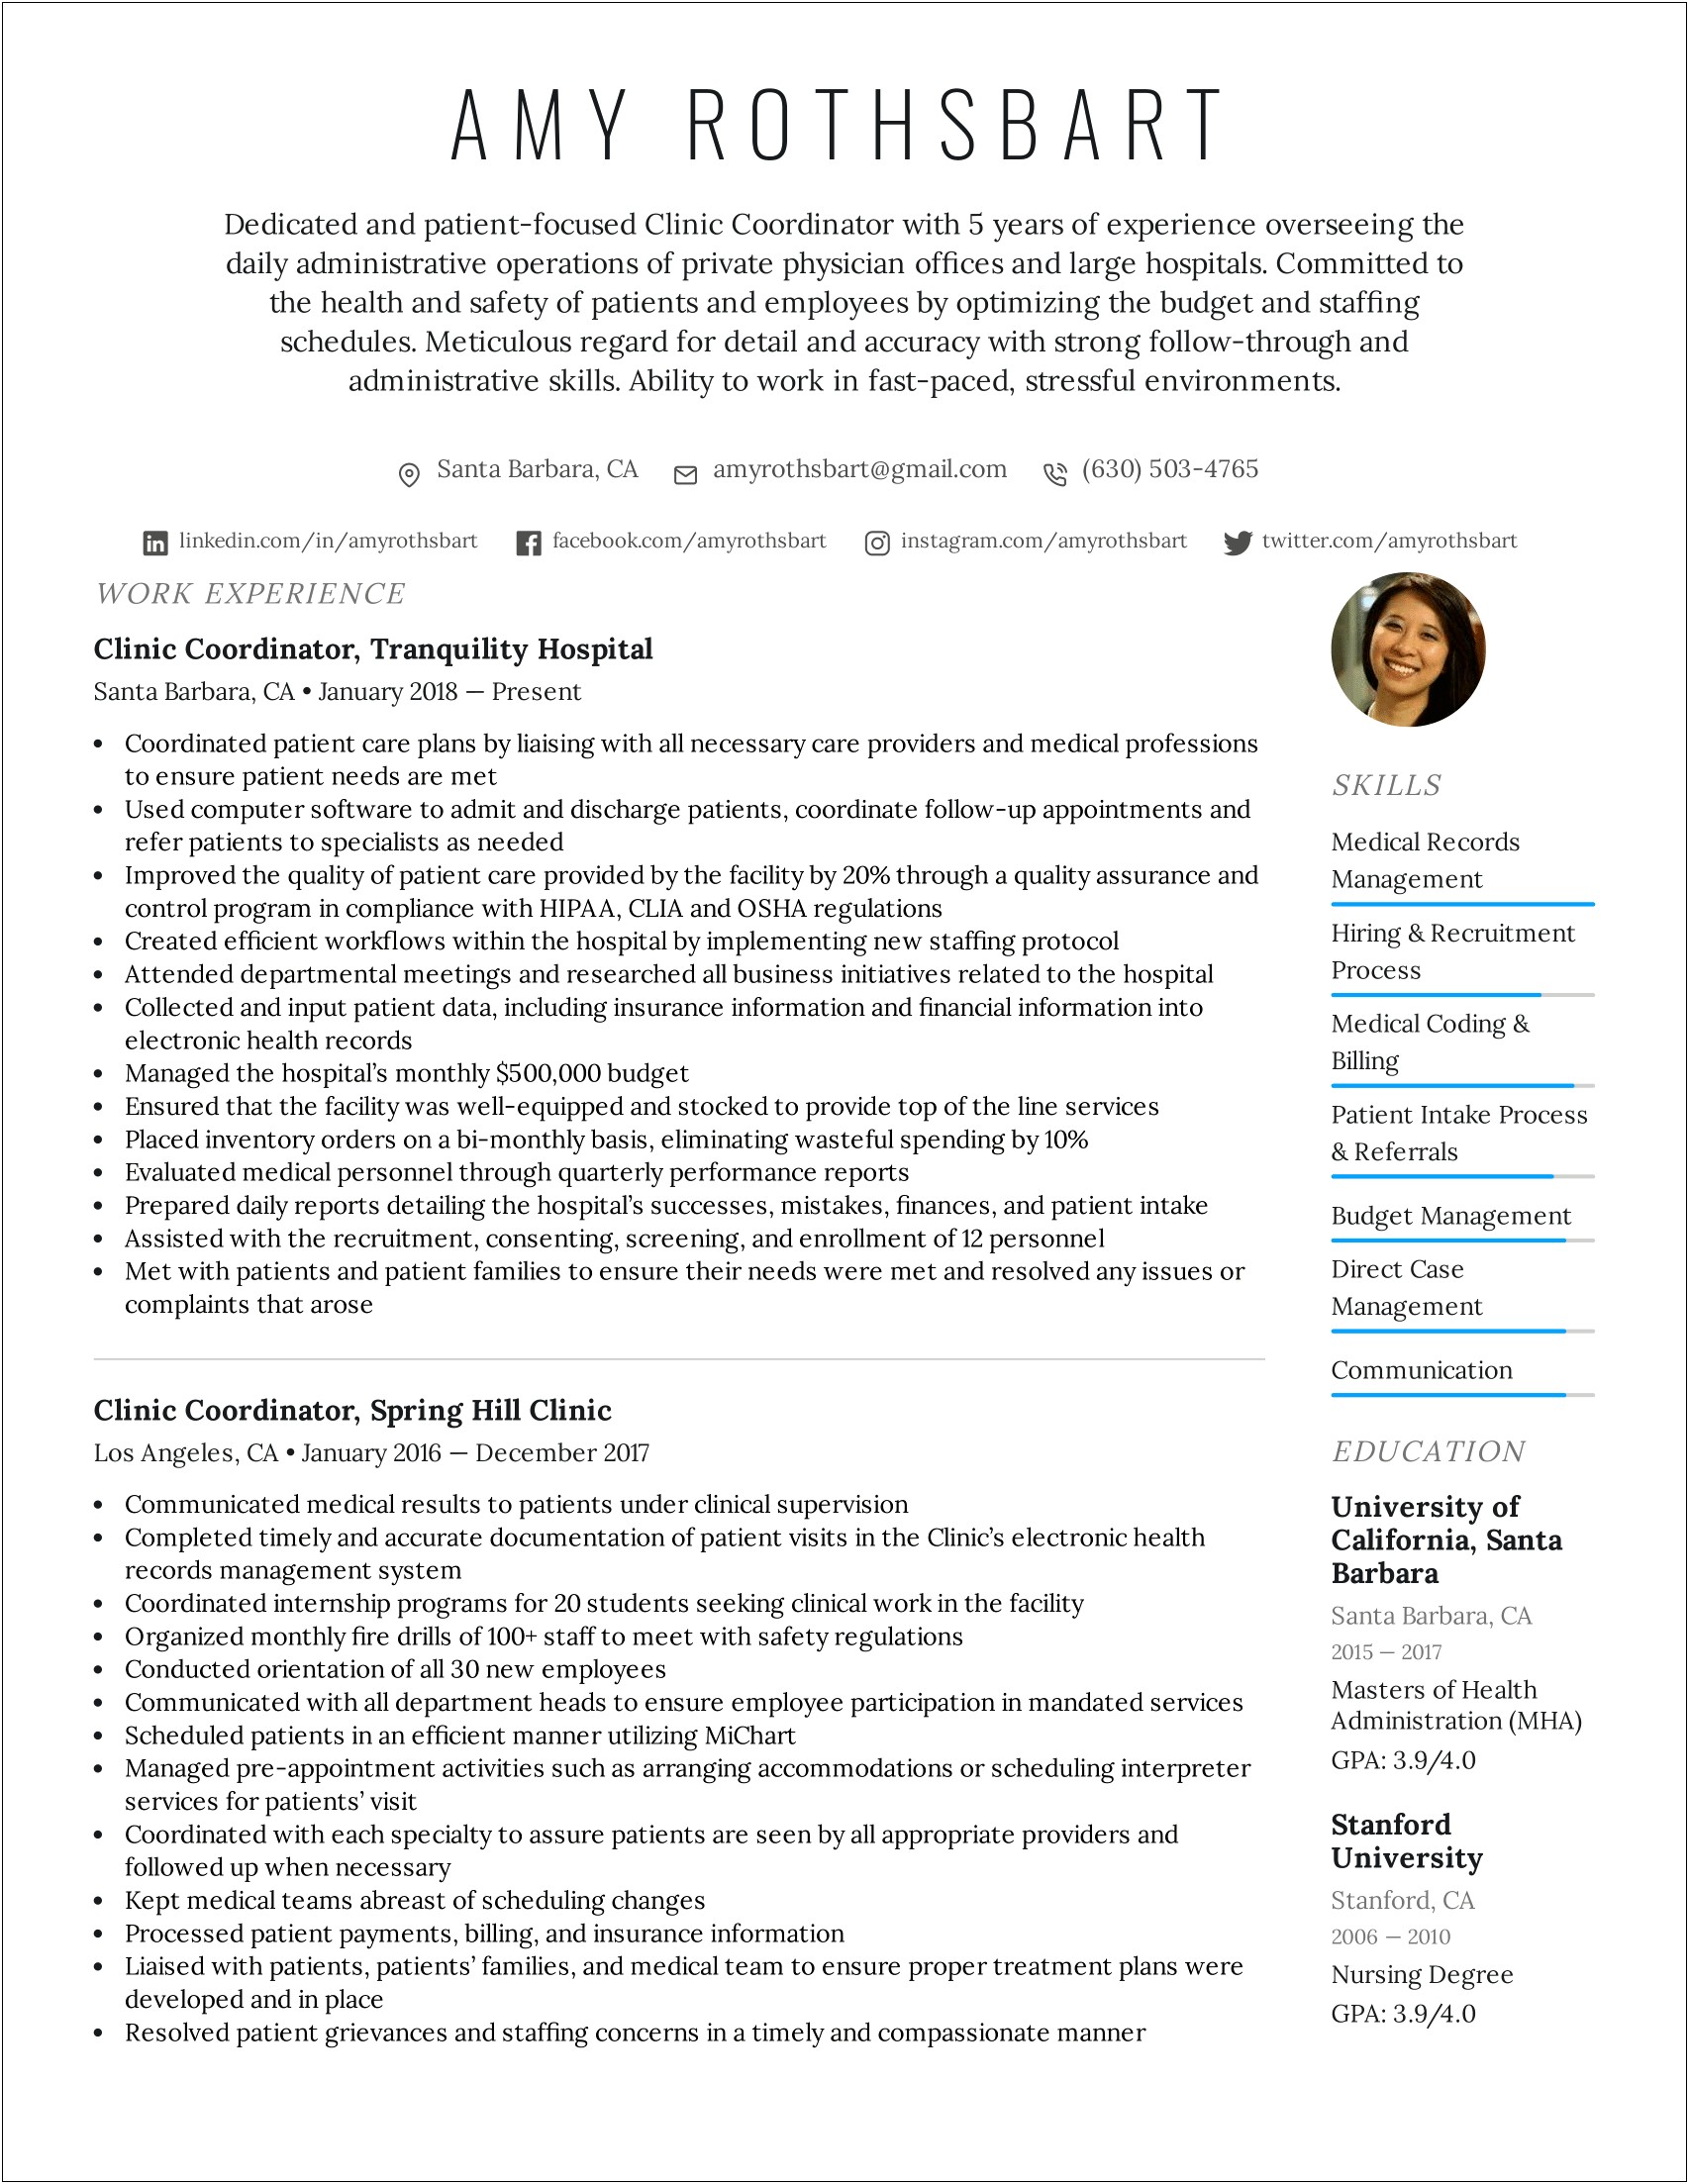 Legal Intake Specialist Job Description Resume